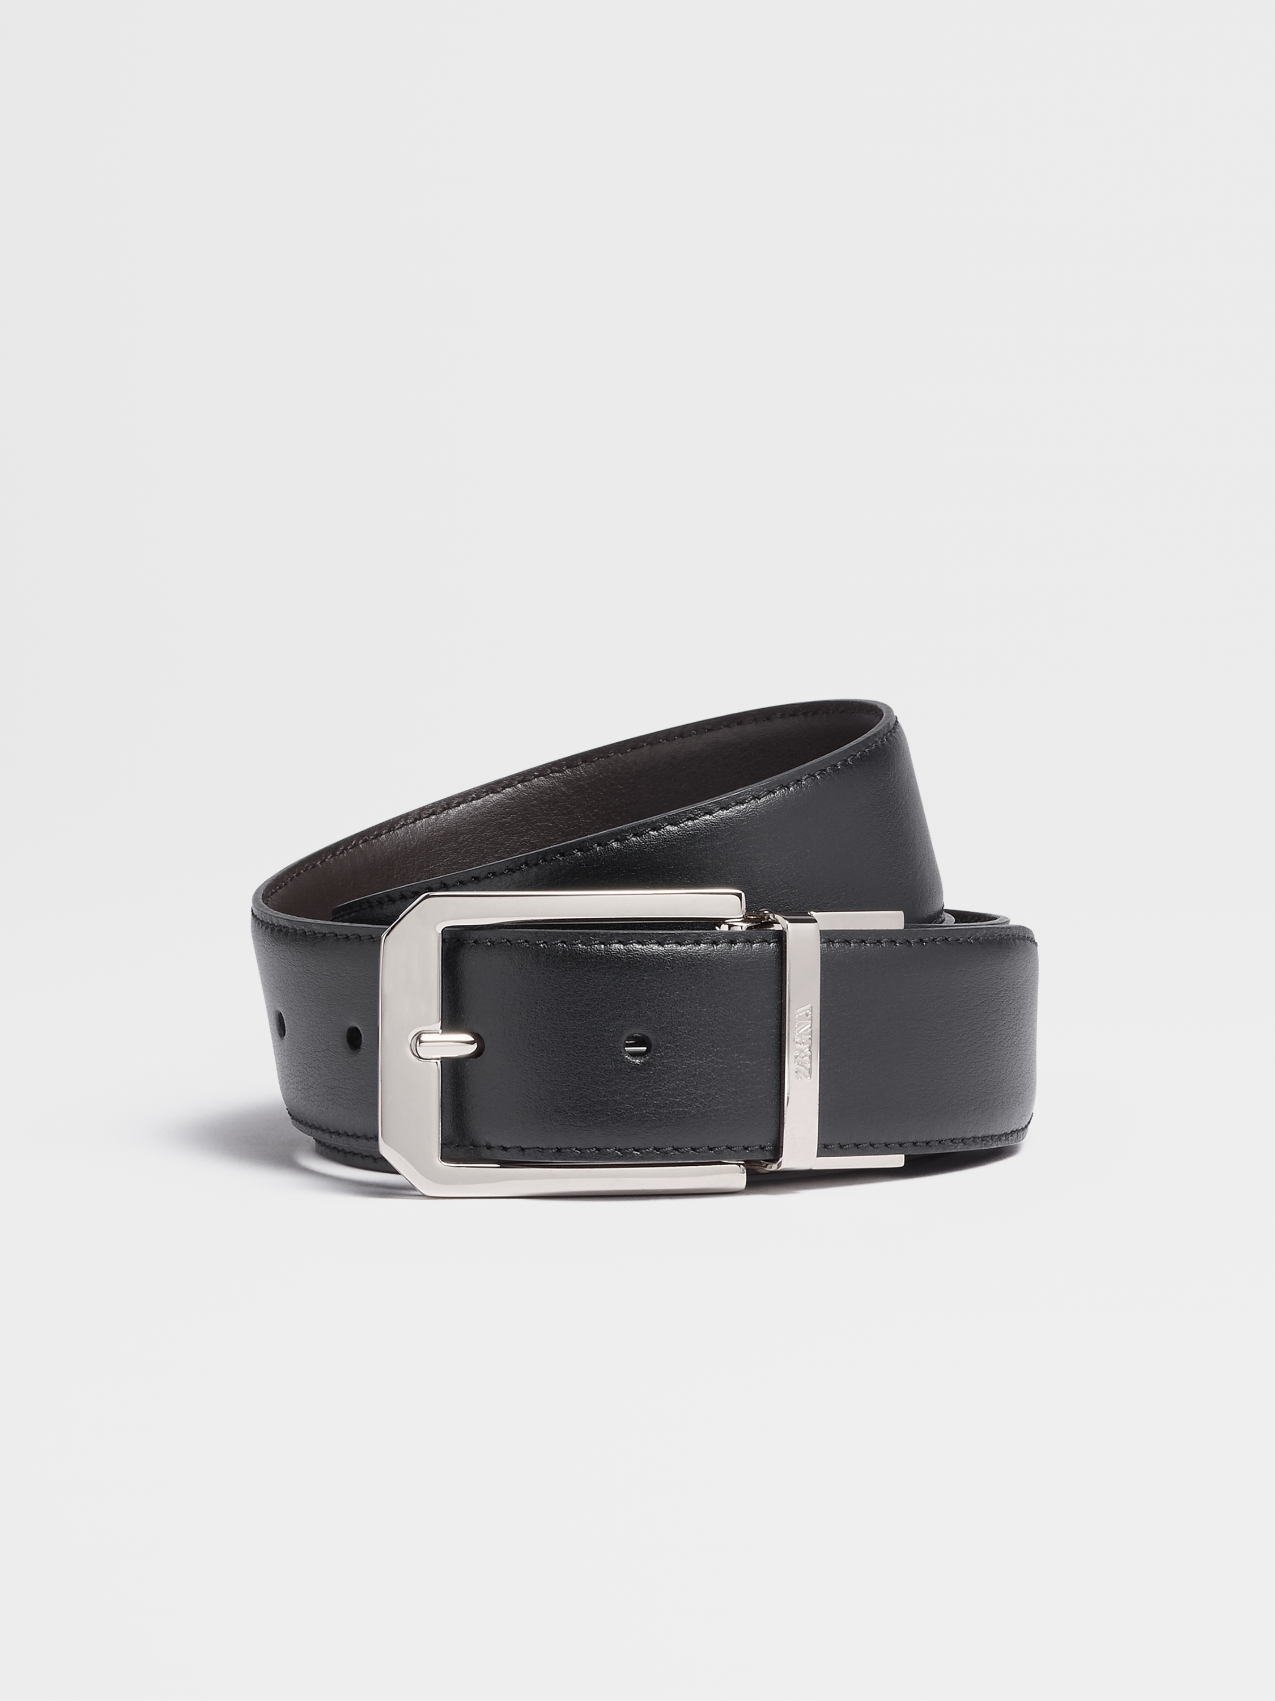 Black and Dark Brown Reversible Leather Belt